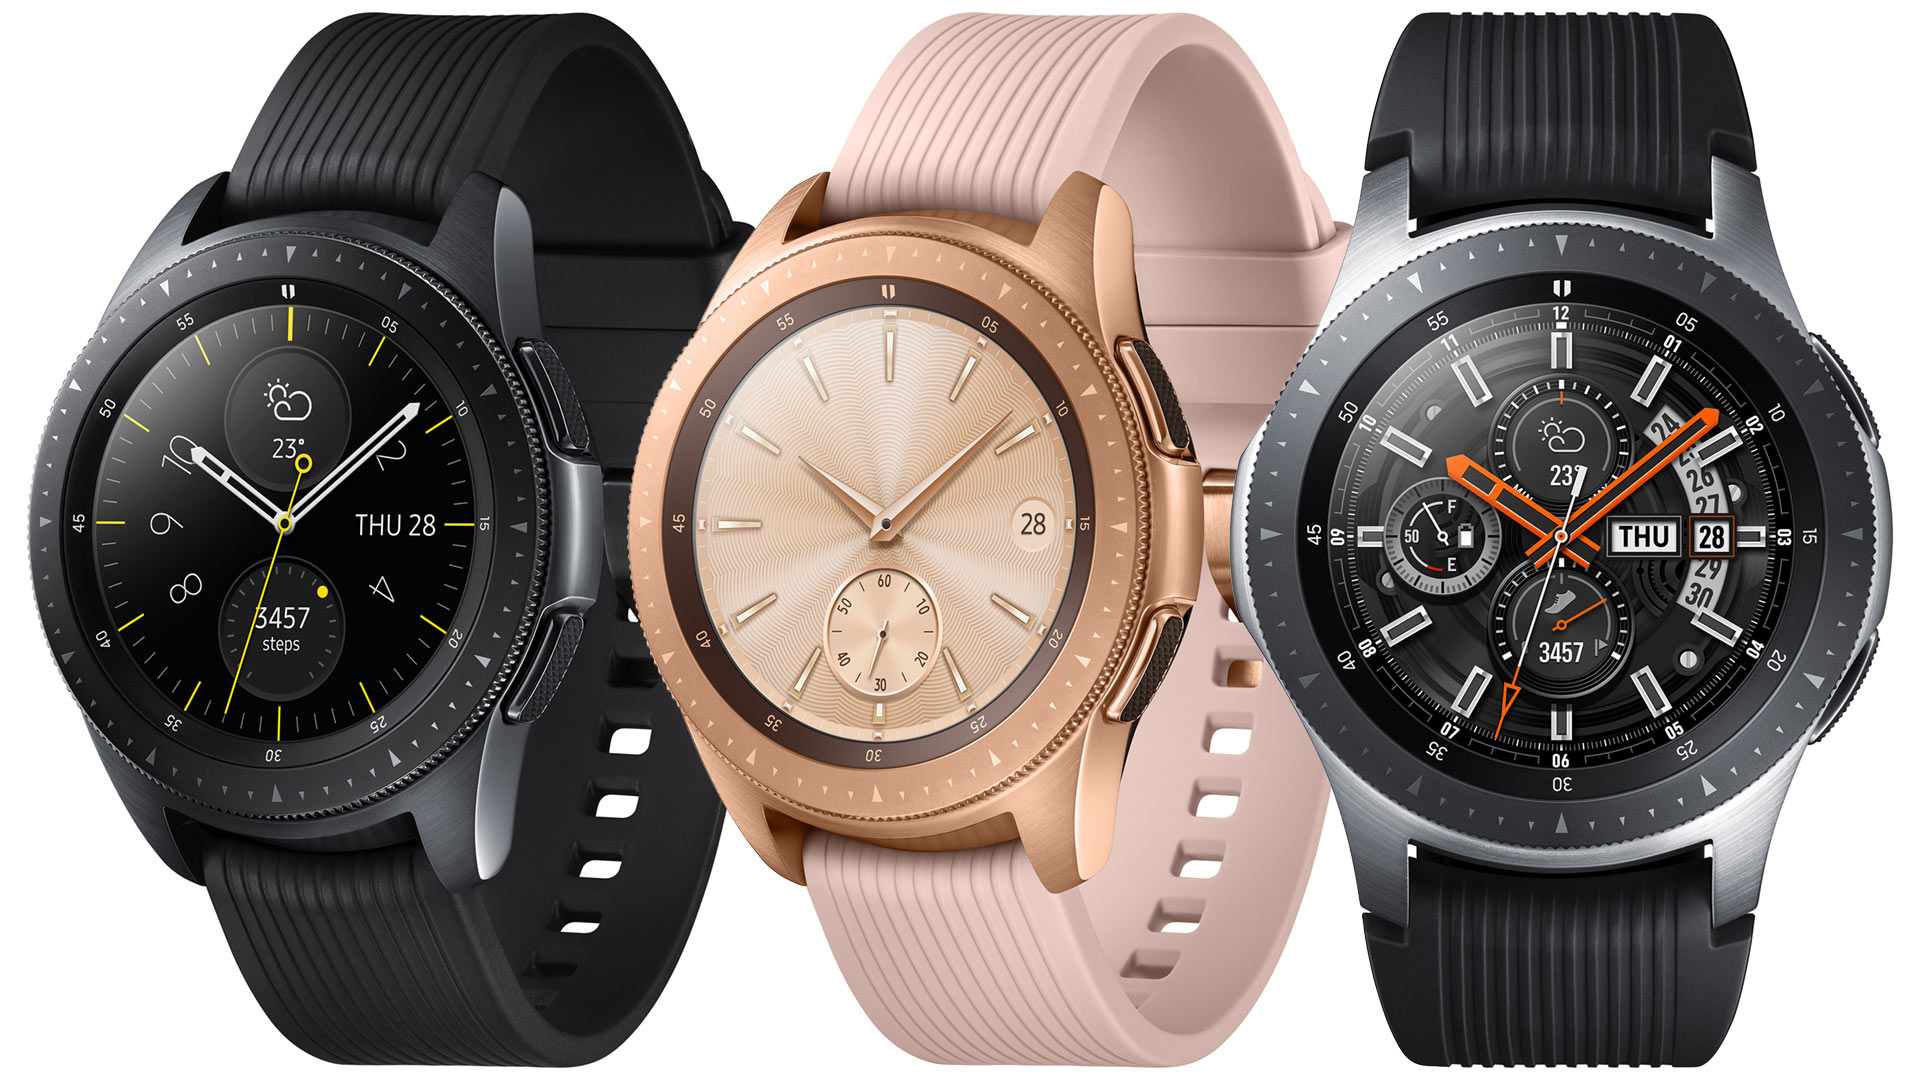 Новые galaxy watch. Samsung Galaxy watch 42mm. Samsung Galaxy watch 4 45mm. Samsung Galaxy watch 2018. Samsung Galaxy watch SM-r810.